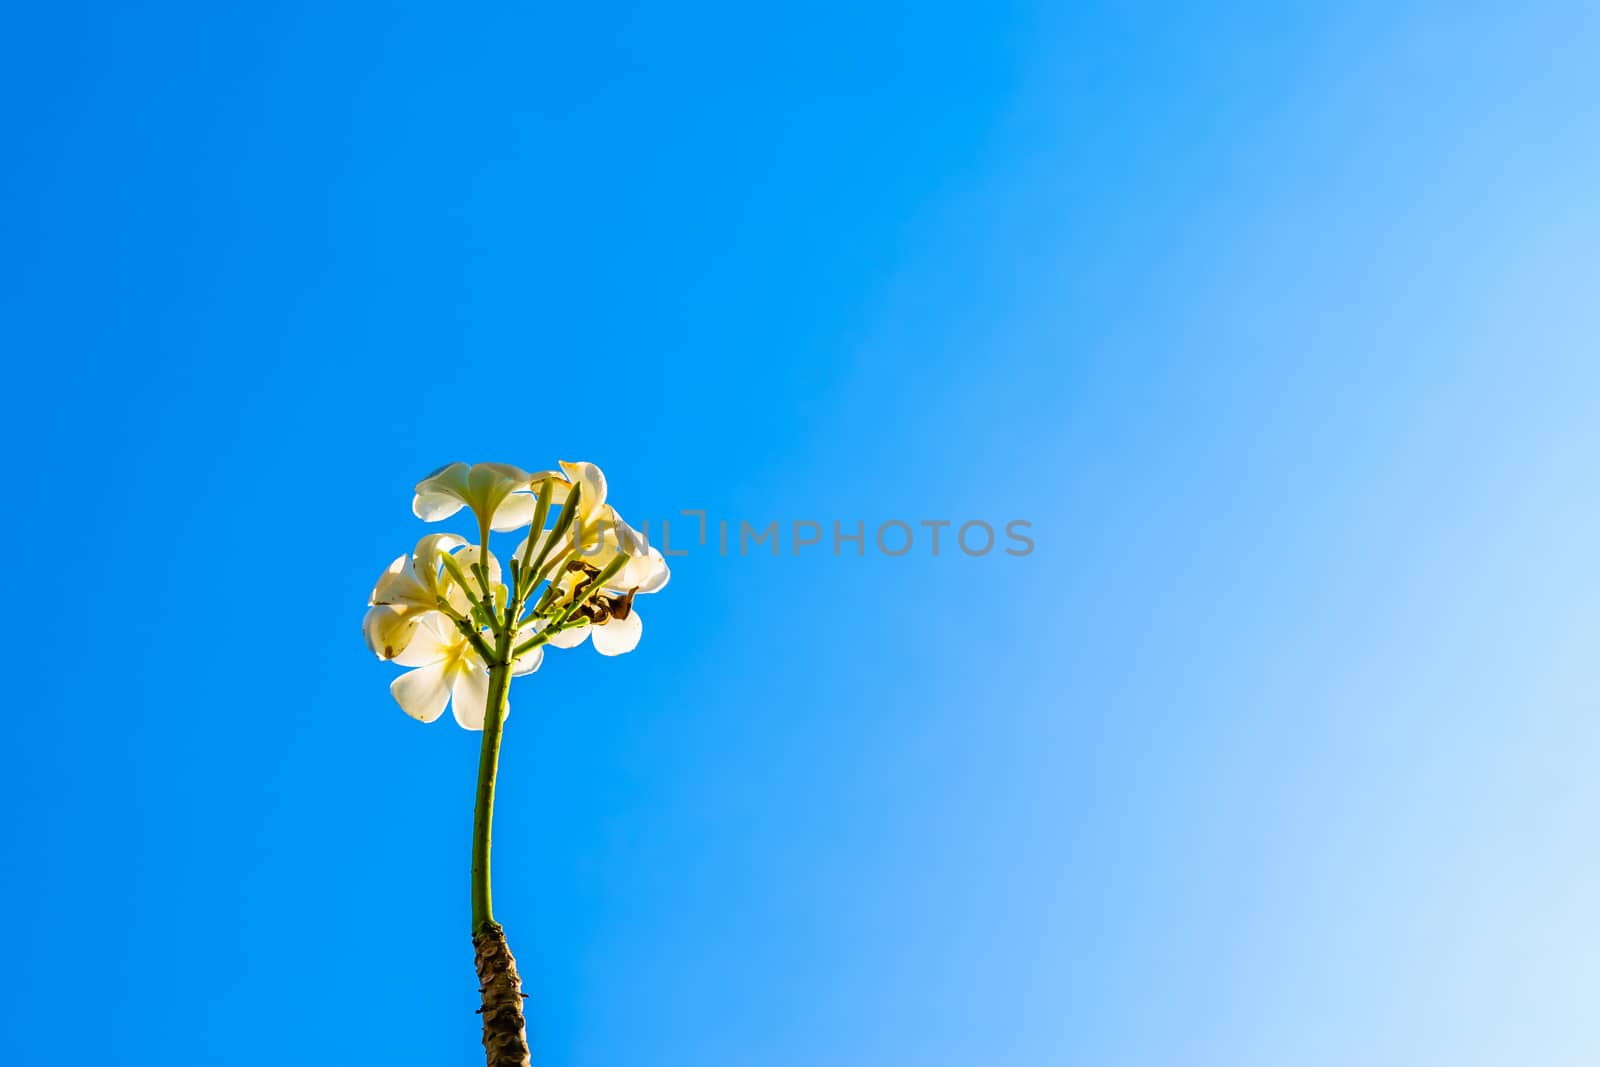 Frangipani tree under the clear blue sky